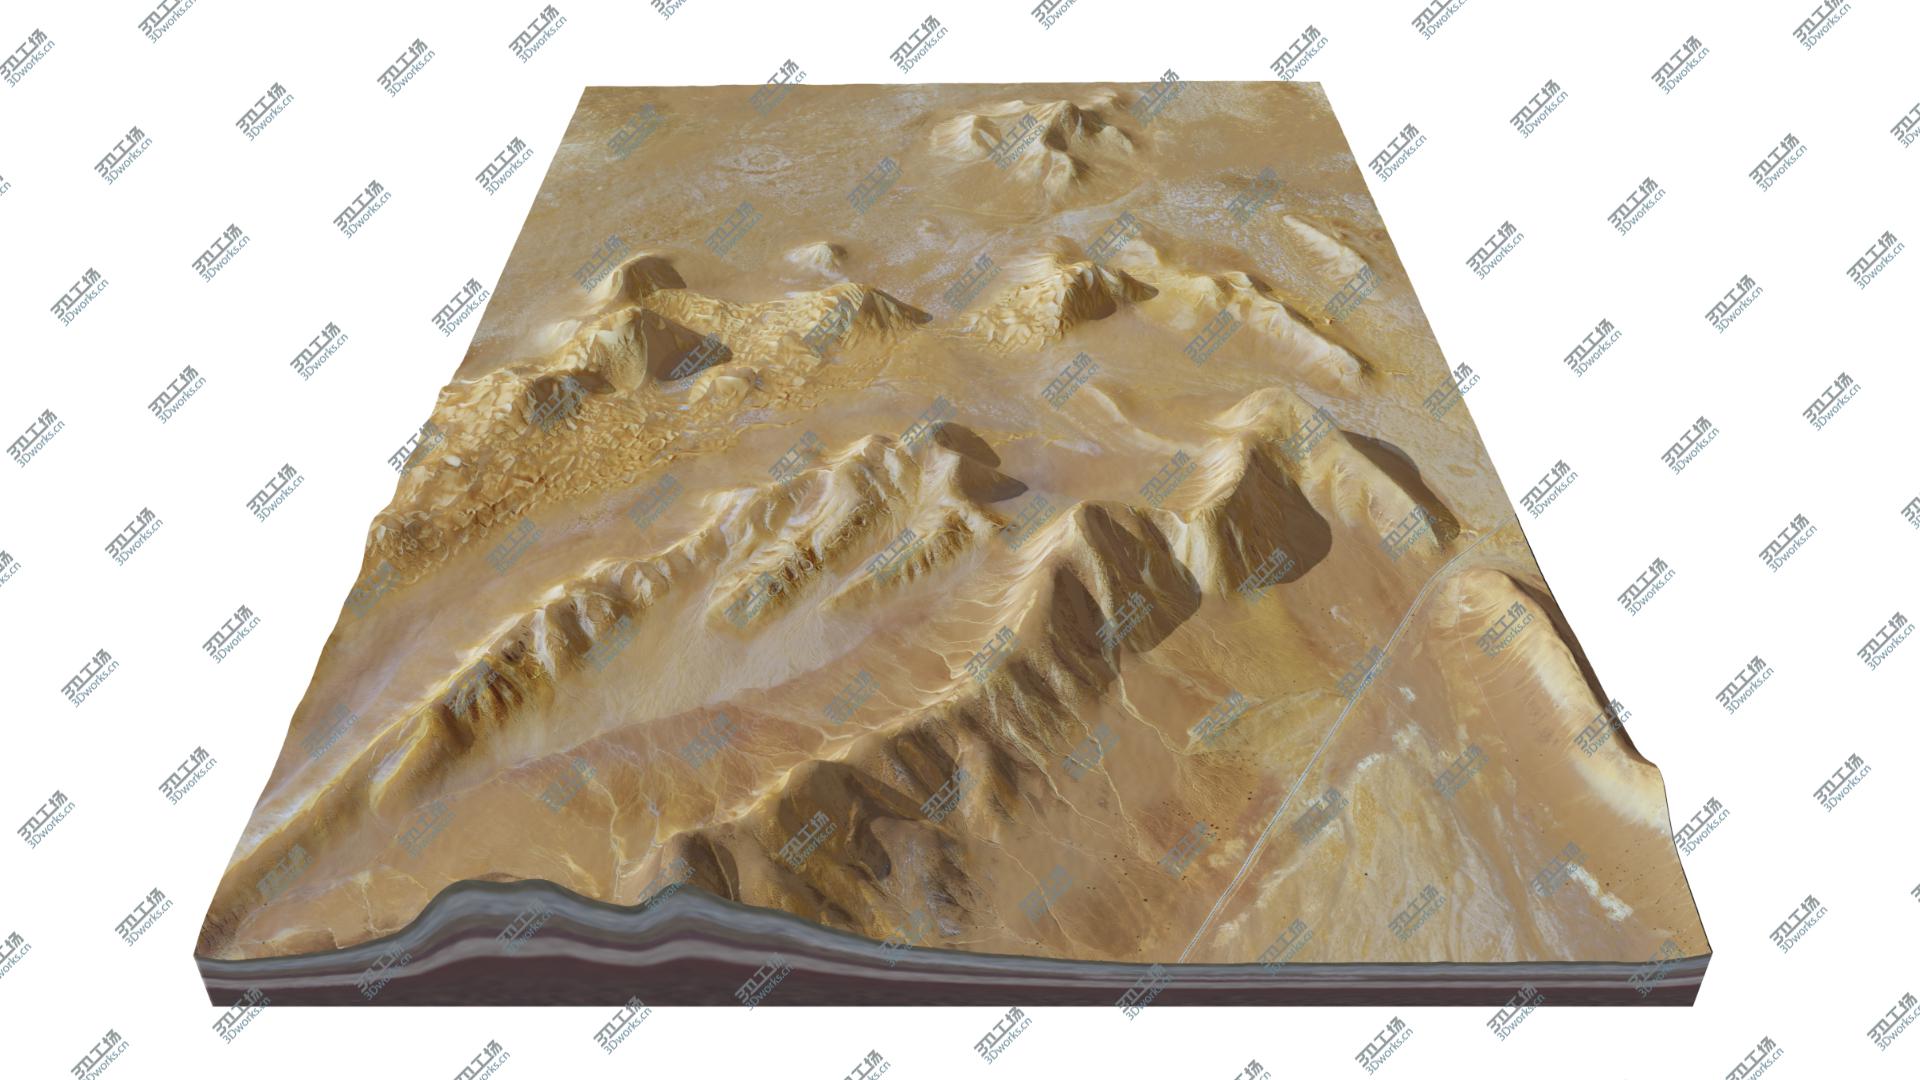 images/goods_img/202104091/Photorealistic Desert Valley and Mountain Range model/1.jpg